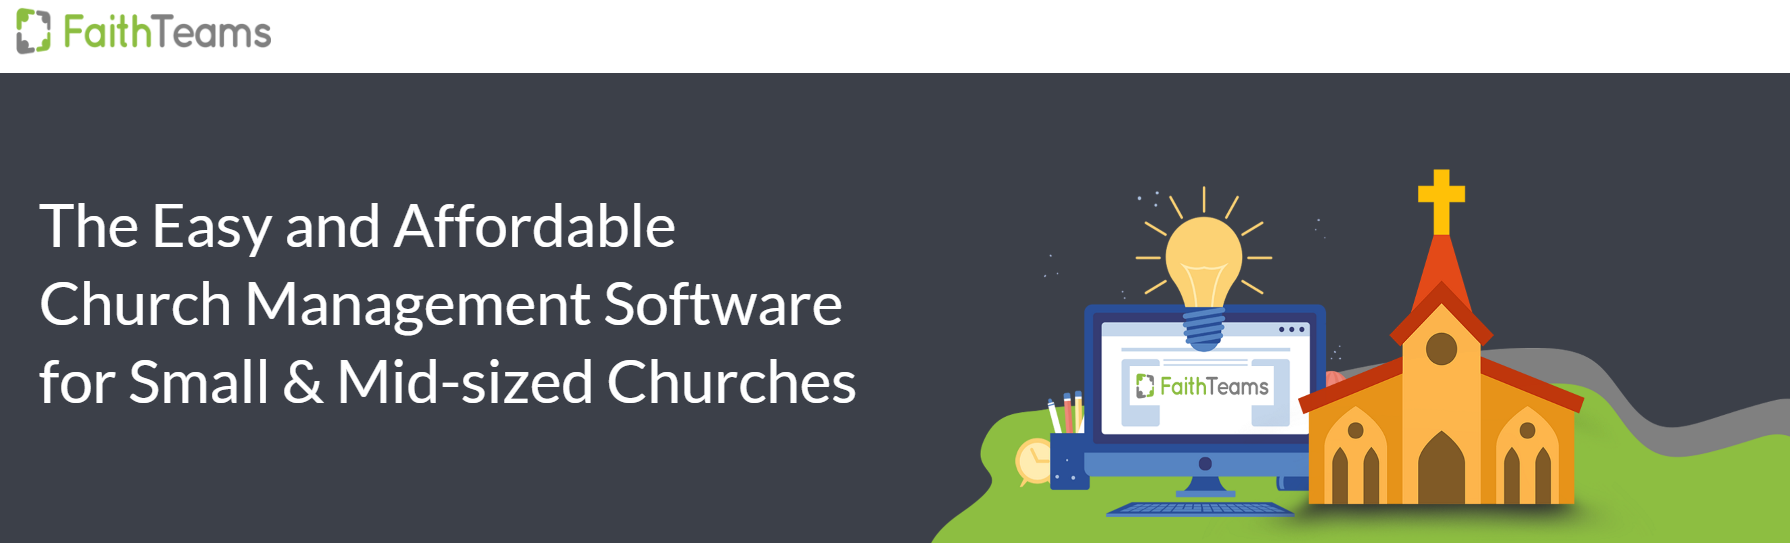 faith teams church management software